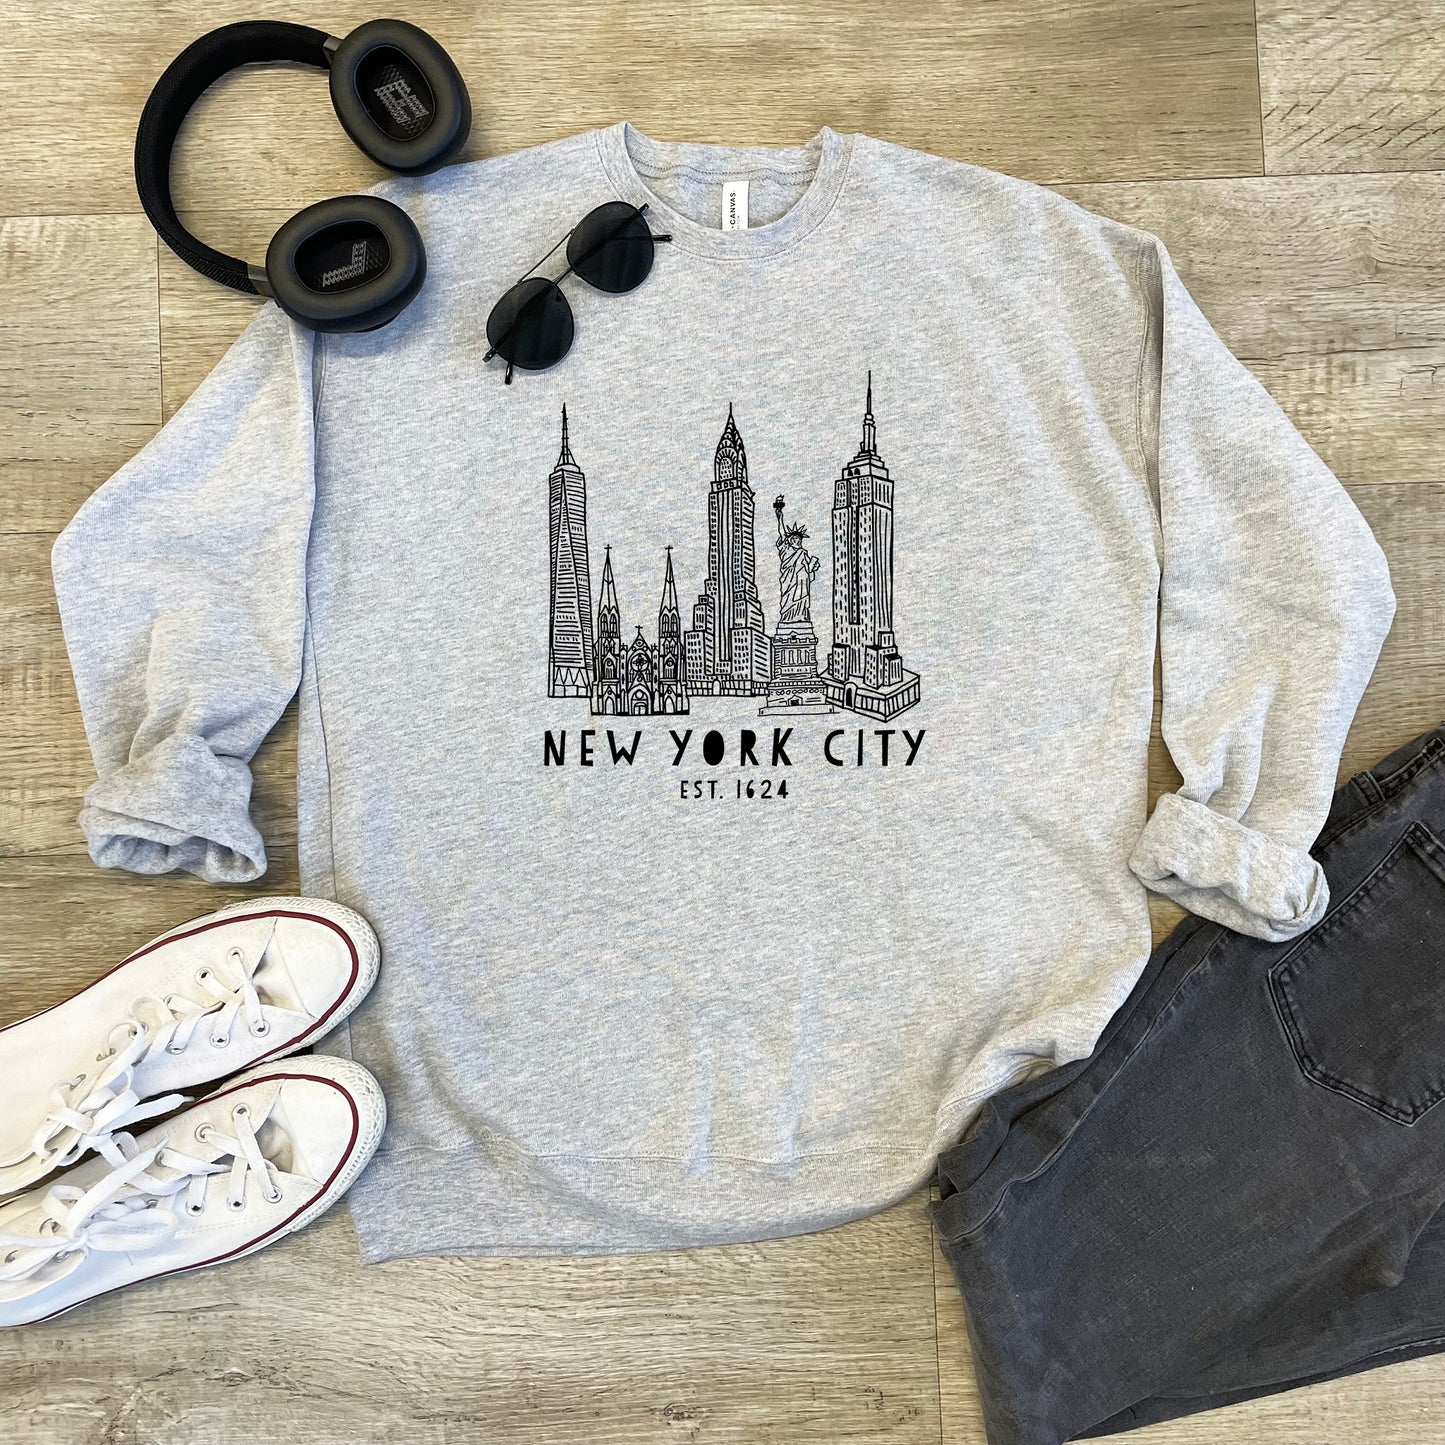 New York City Skyline (NYC) - Unisex Sweatshirt - Heather Gray or Dusty Blue